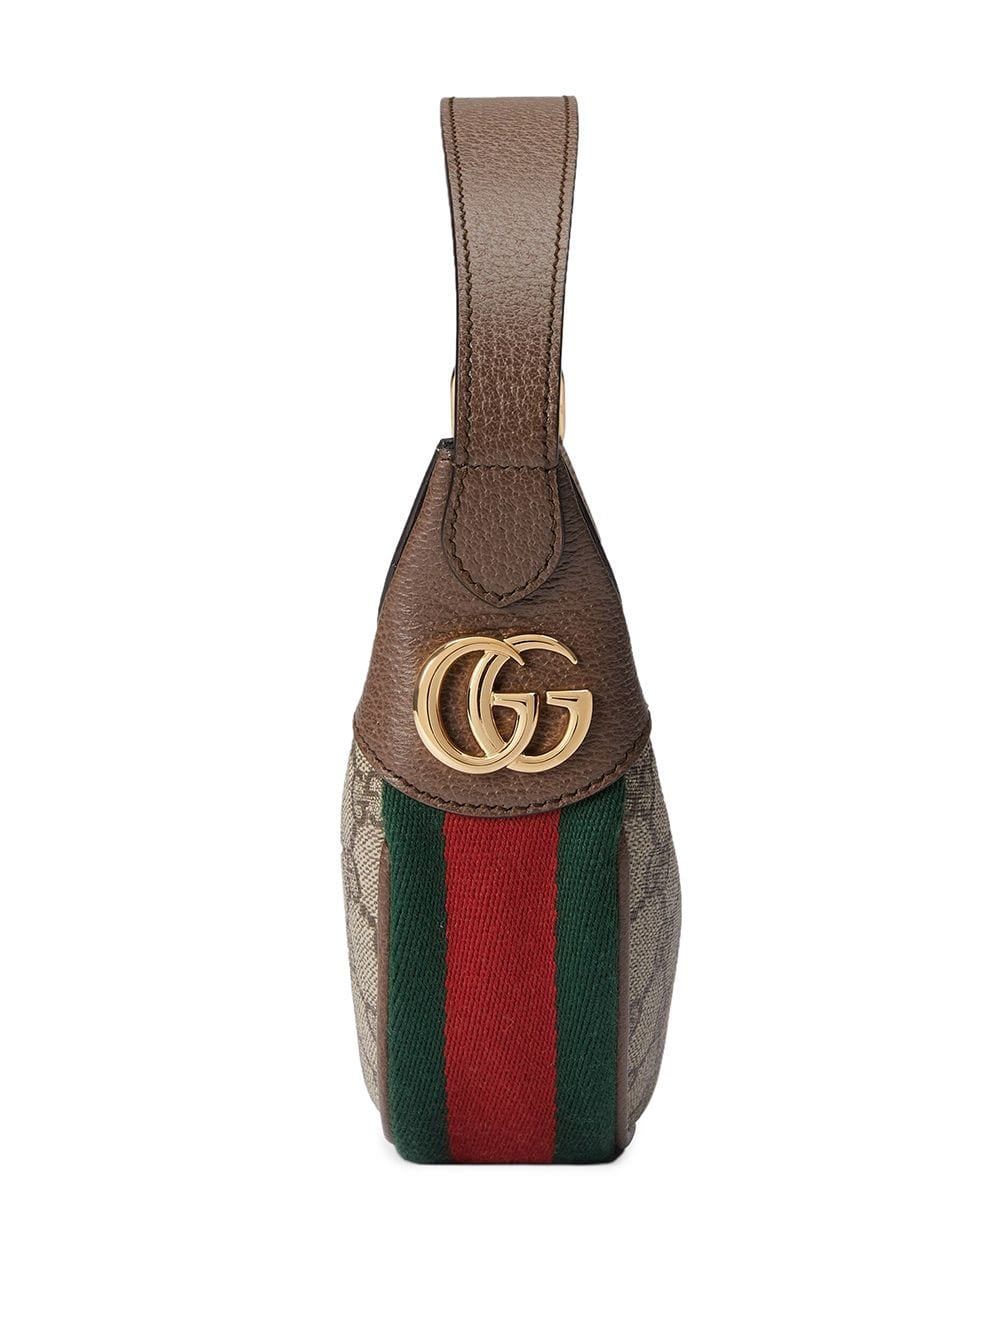 Ophidia GG Supreme Mini Shoulder Bag in Brown - Gucci